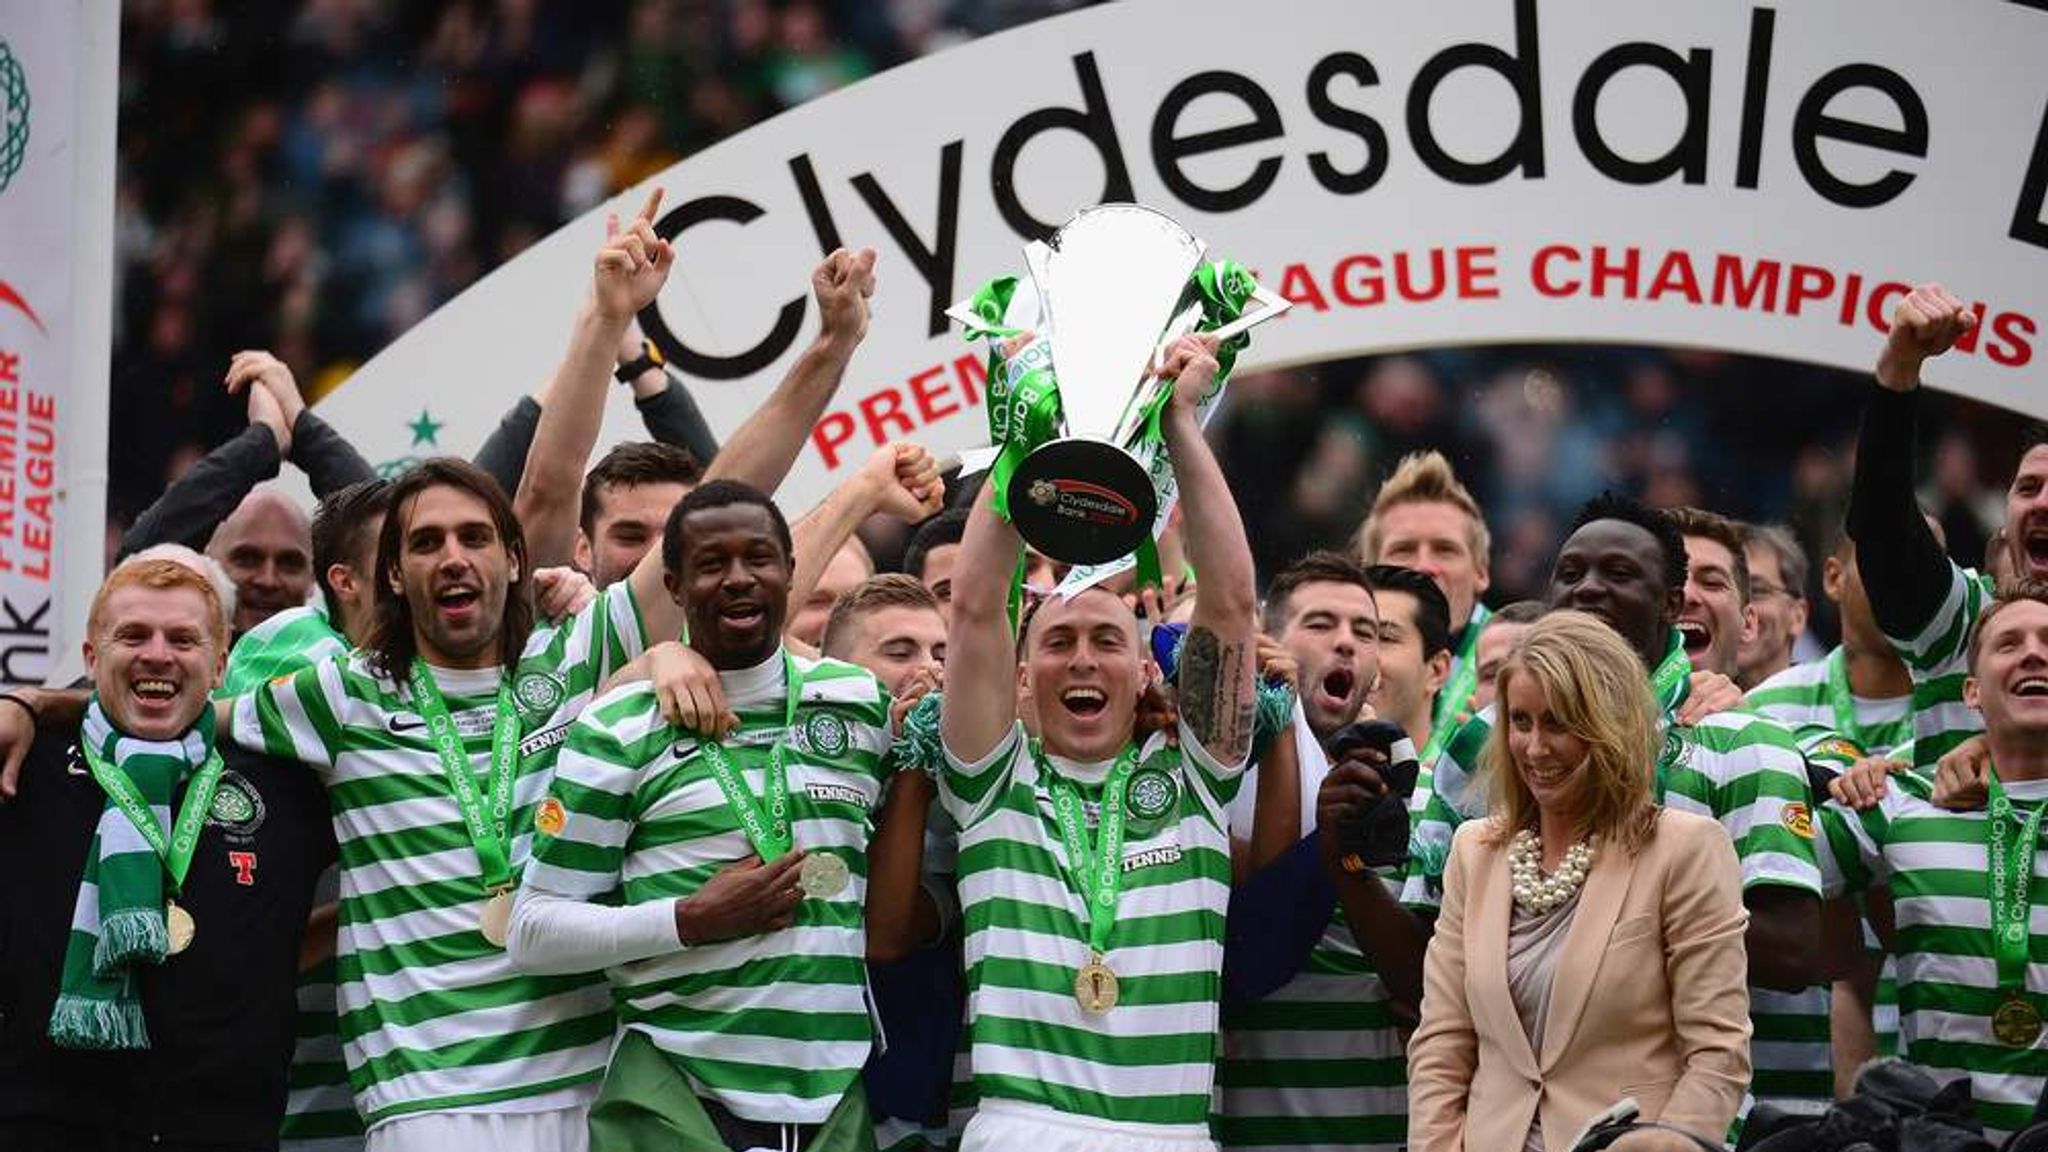 Soccer - Cyldesdale Bank Scottish Premier League - Celtic 2012-13